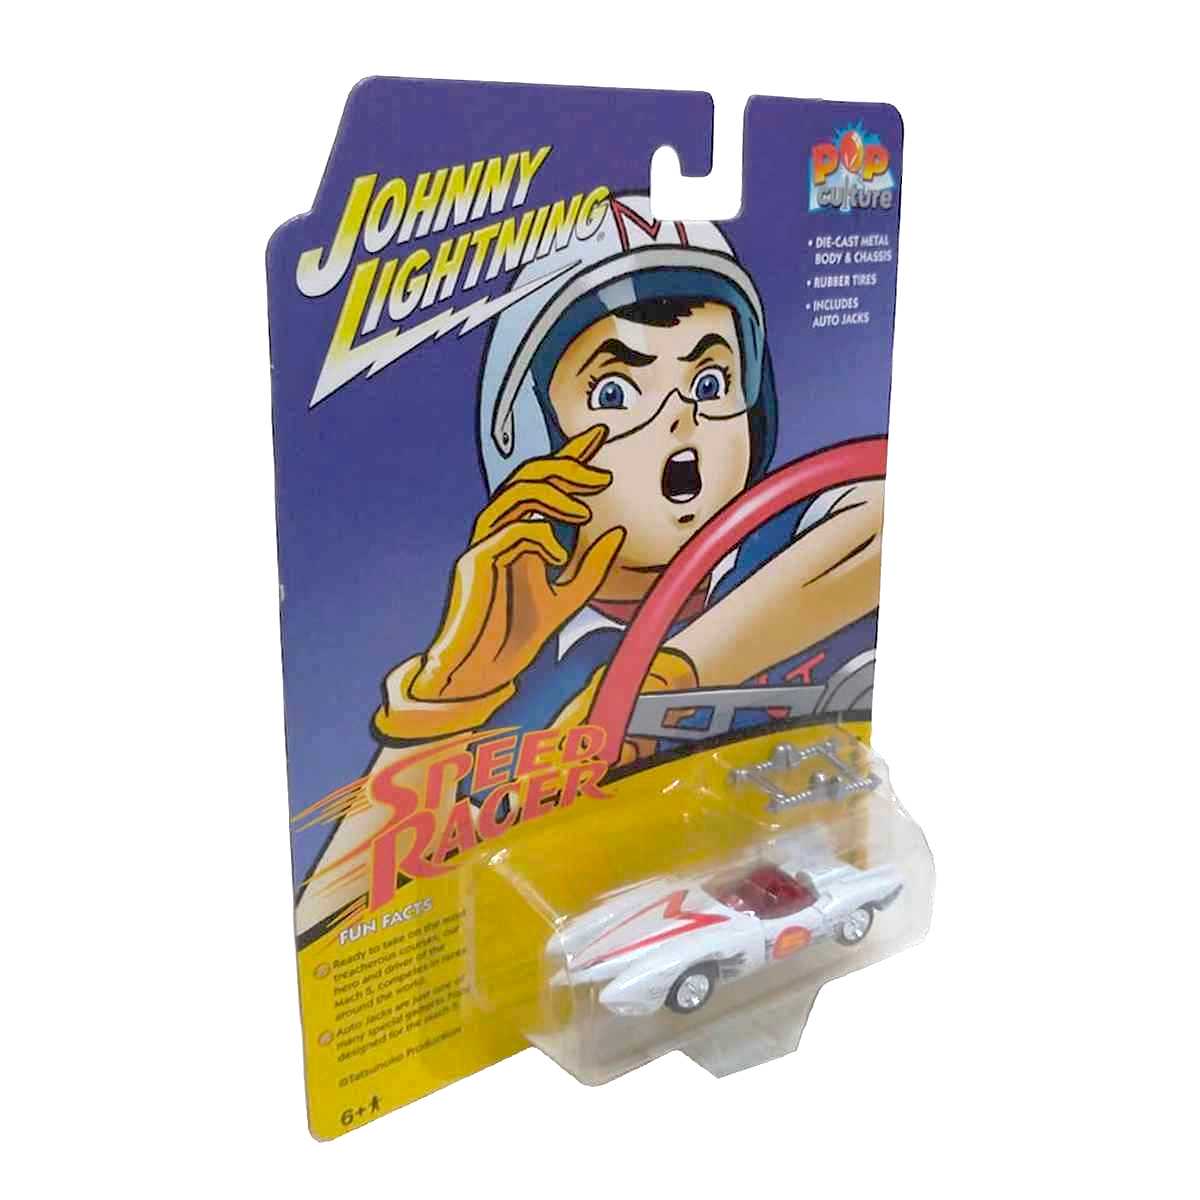 Johnny Lightning Speed Racer release 2 Mach 5 pneus de borracha JLPC004 escala 1/64